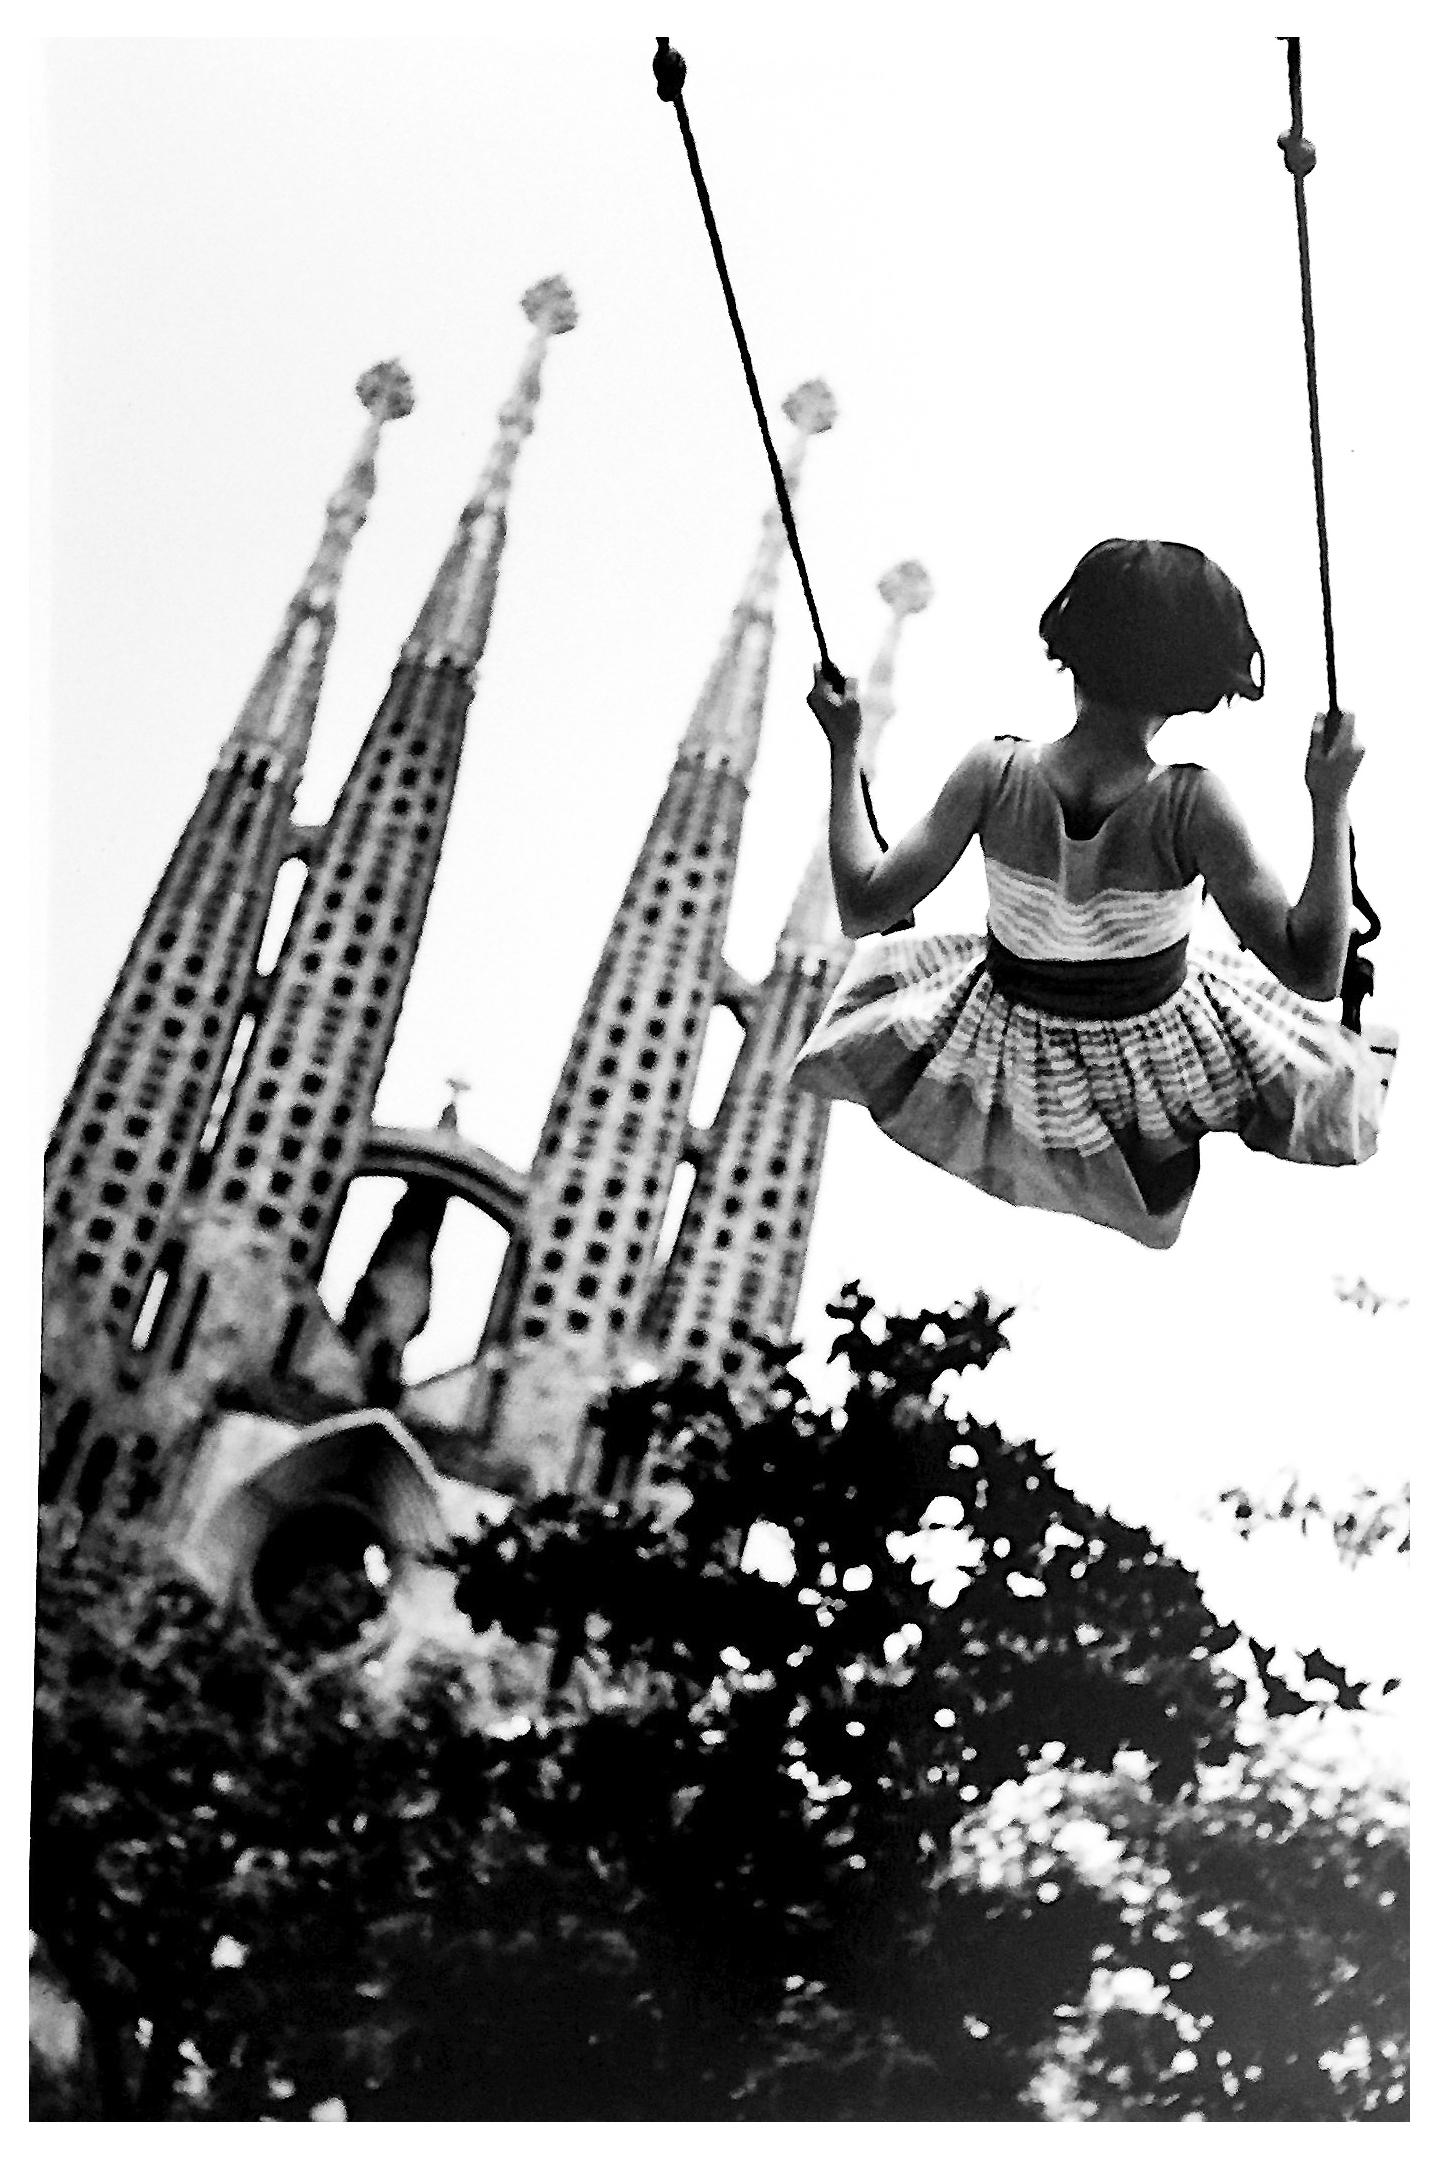 Burt Glinn Portrait Photograph - Swing, Black and White Portrait Photo of Child and Gaudi Cathedral Barcelona